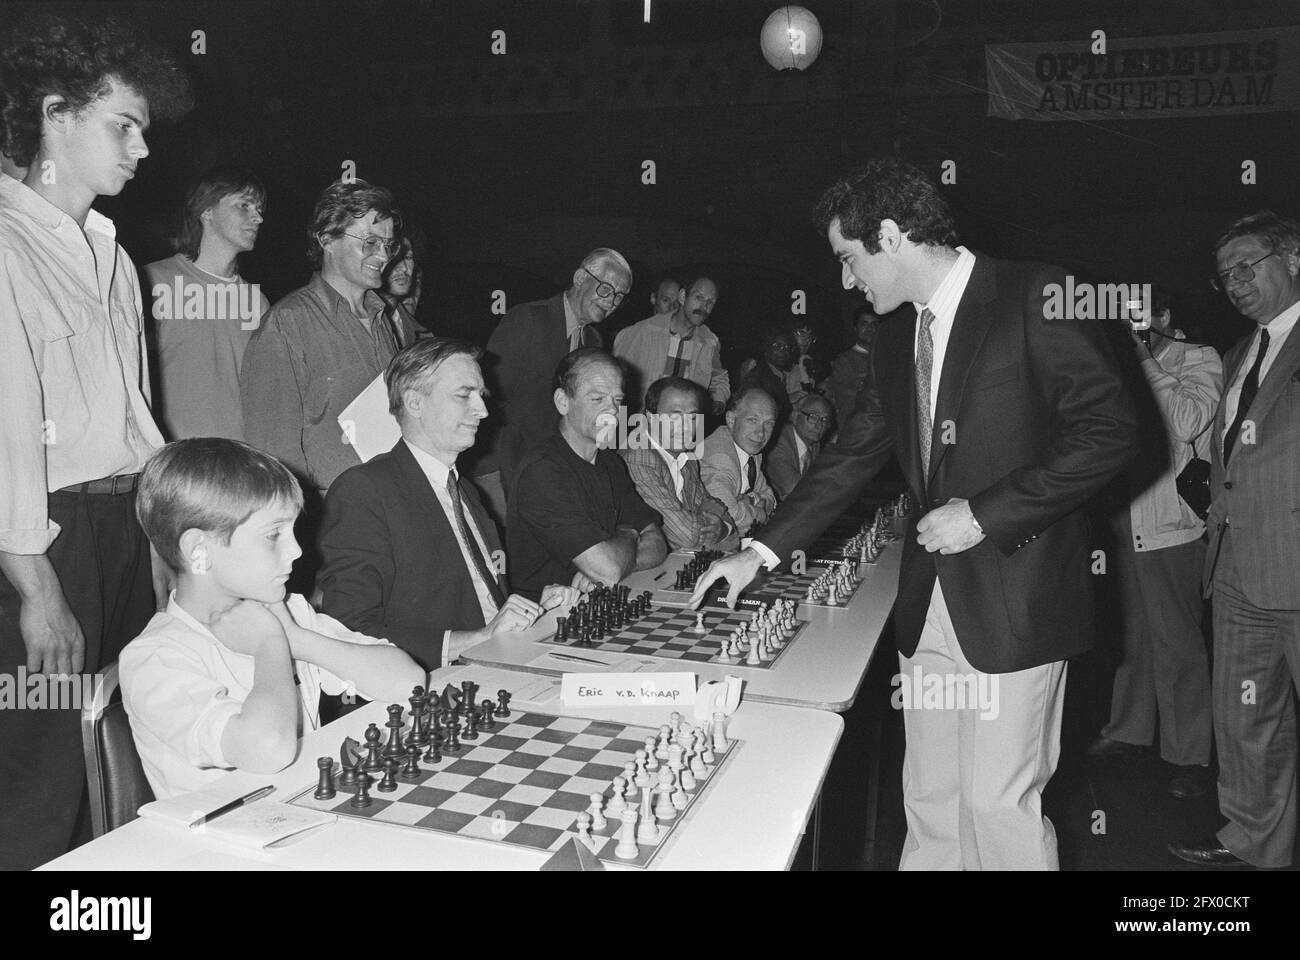 Signed Kasparov v Short 1987. Speed Chess Challenge. London -  Portugal